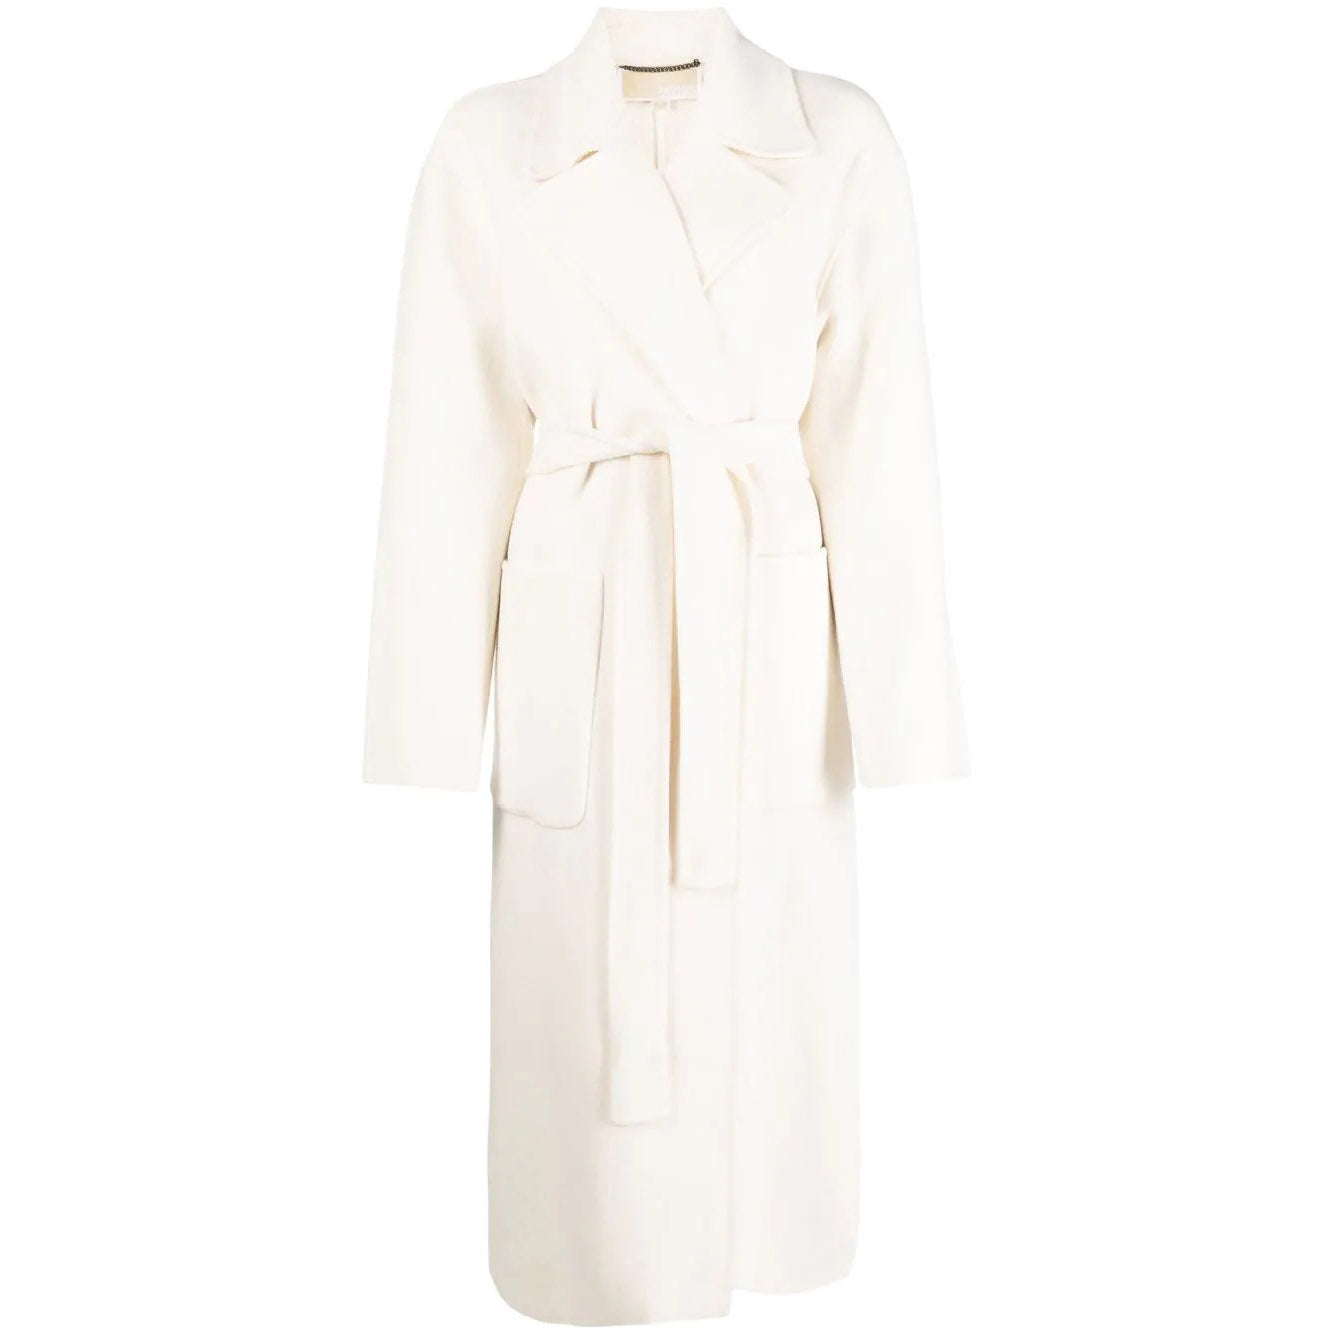 MICHAEL KORS moteriškas baltas paltas